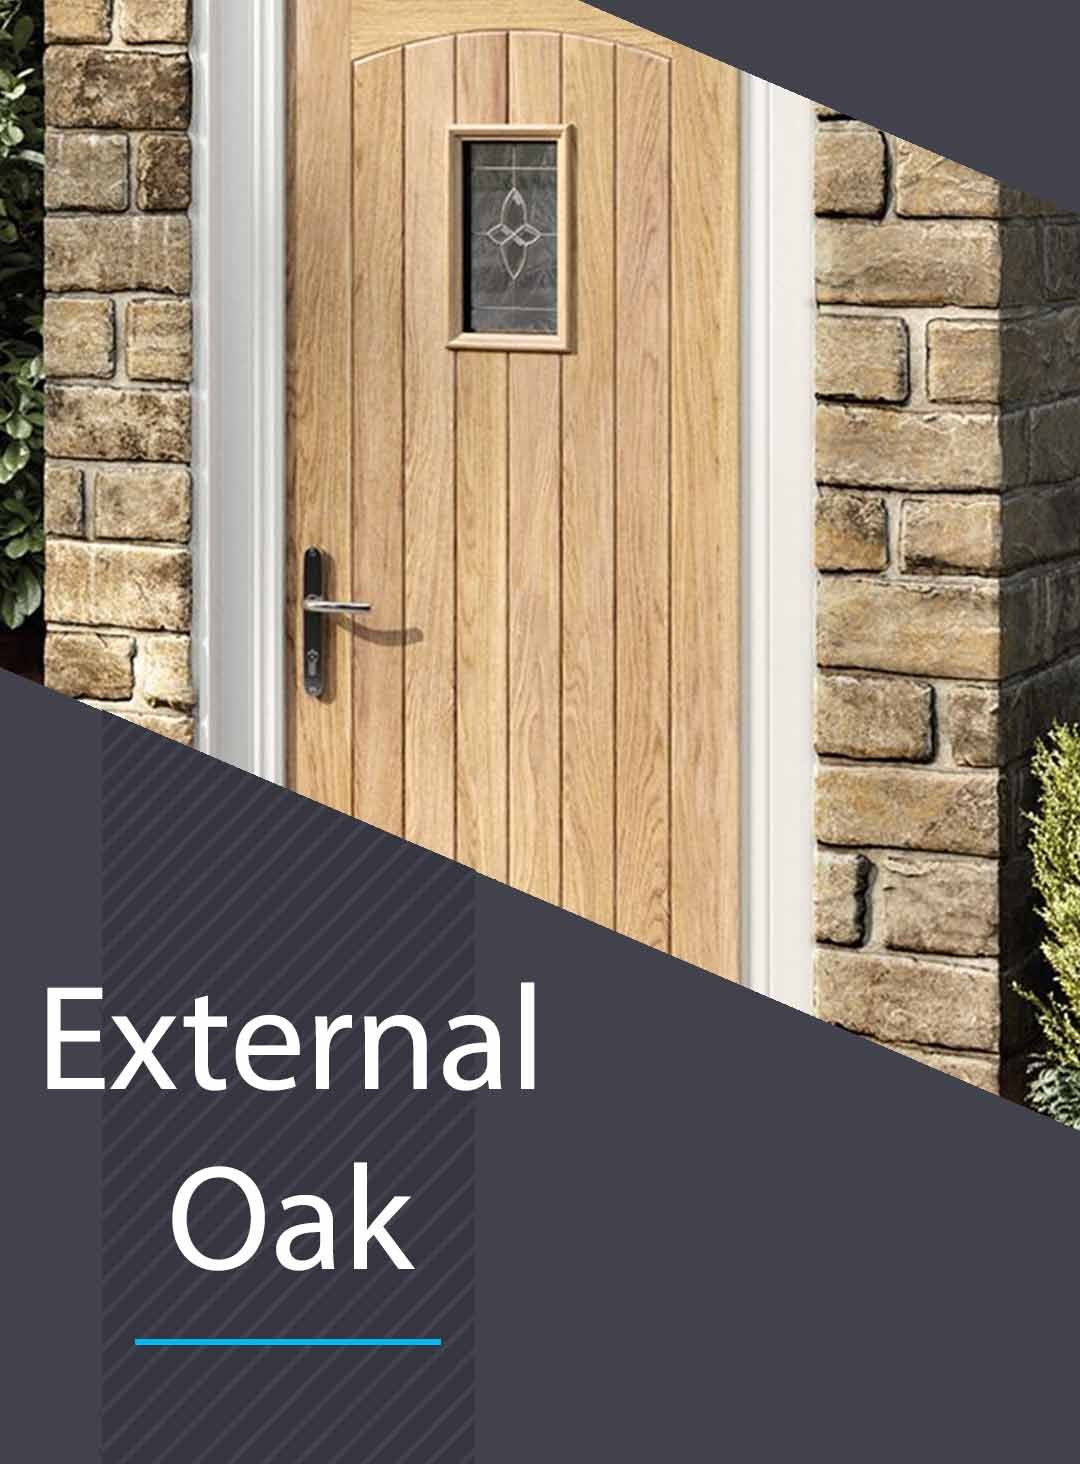 External Oak Doors